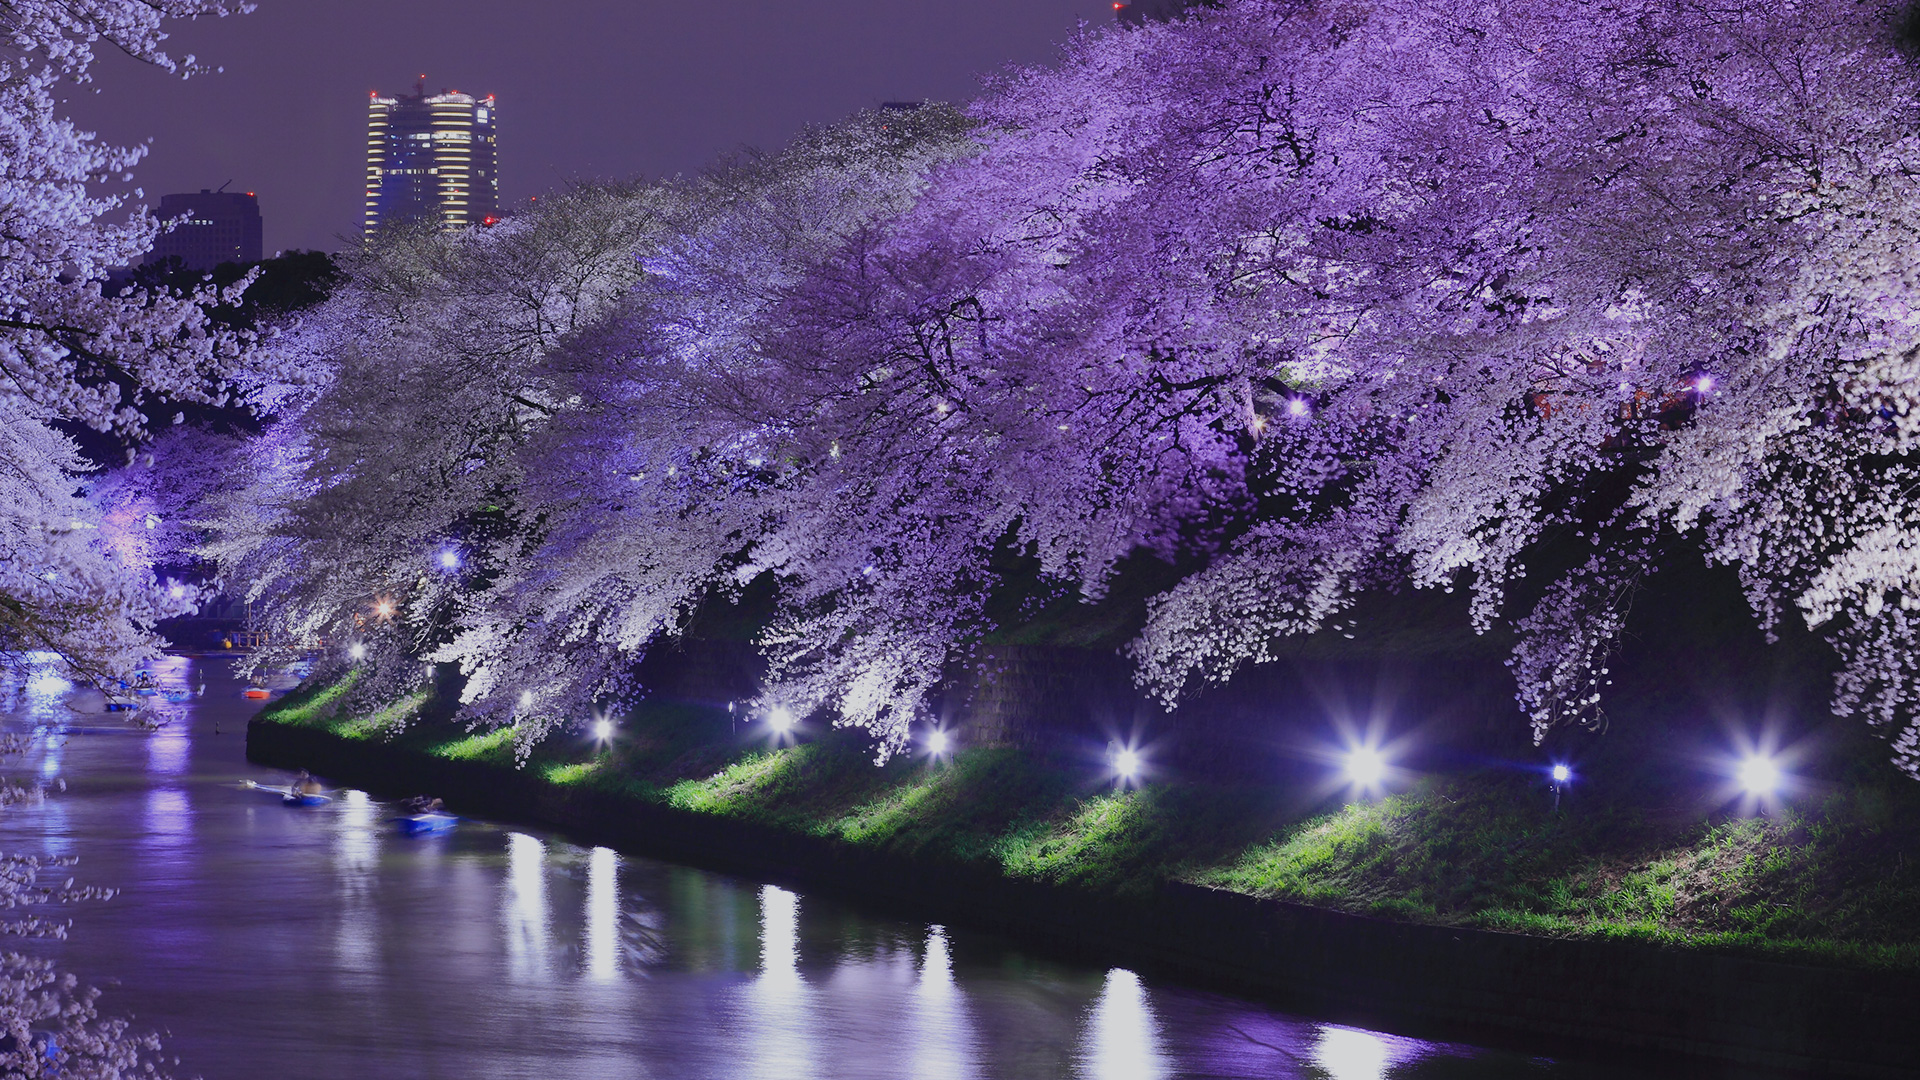 Yozakura: cerezos en flor iluminados de noche / Portal Oficial de